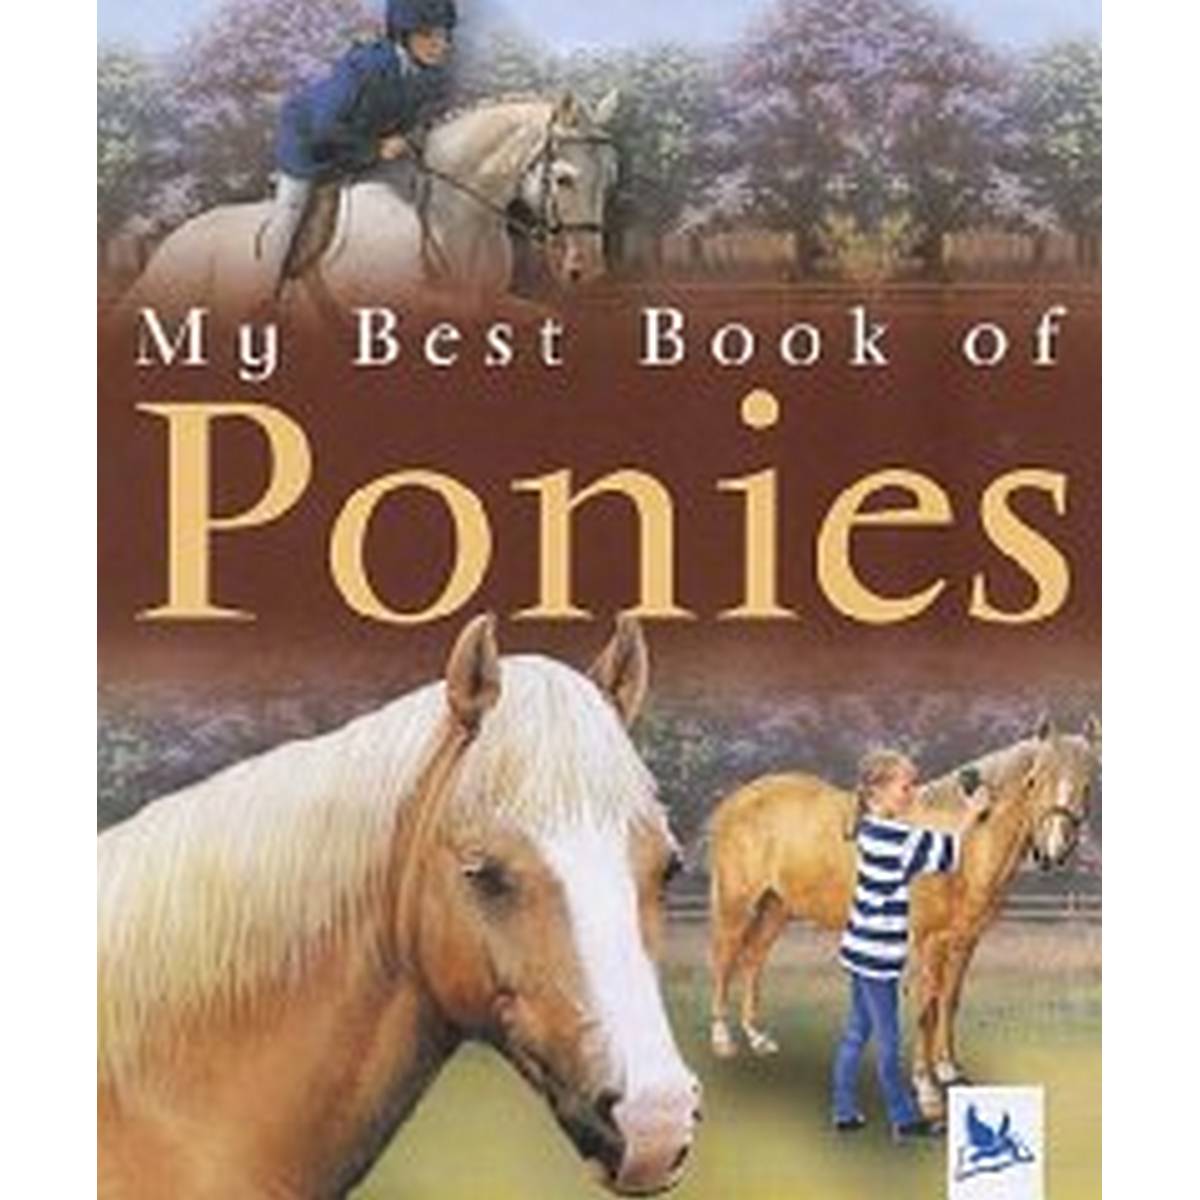 My Best Book of Ponies